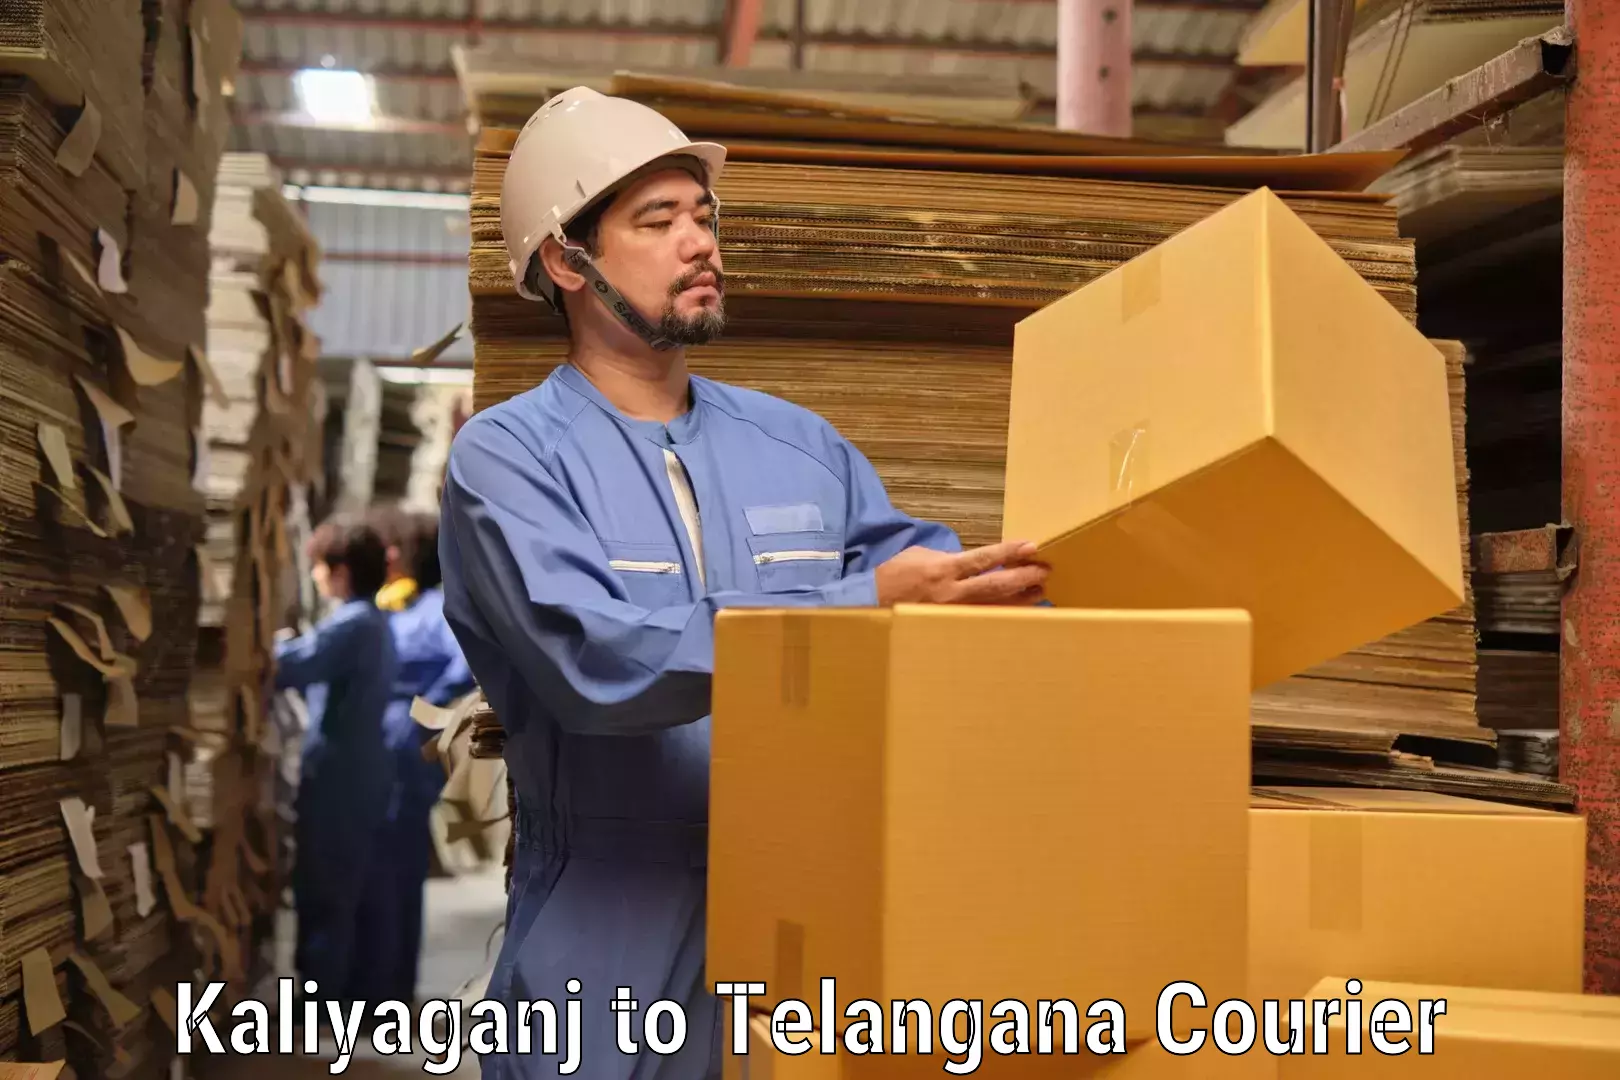 Professional courier handling Kaliyaganj to Bhadrachalam